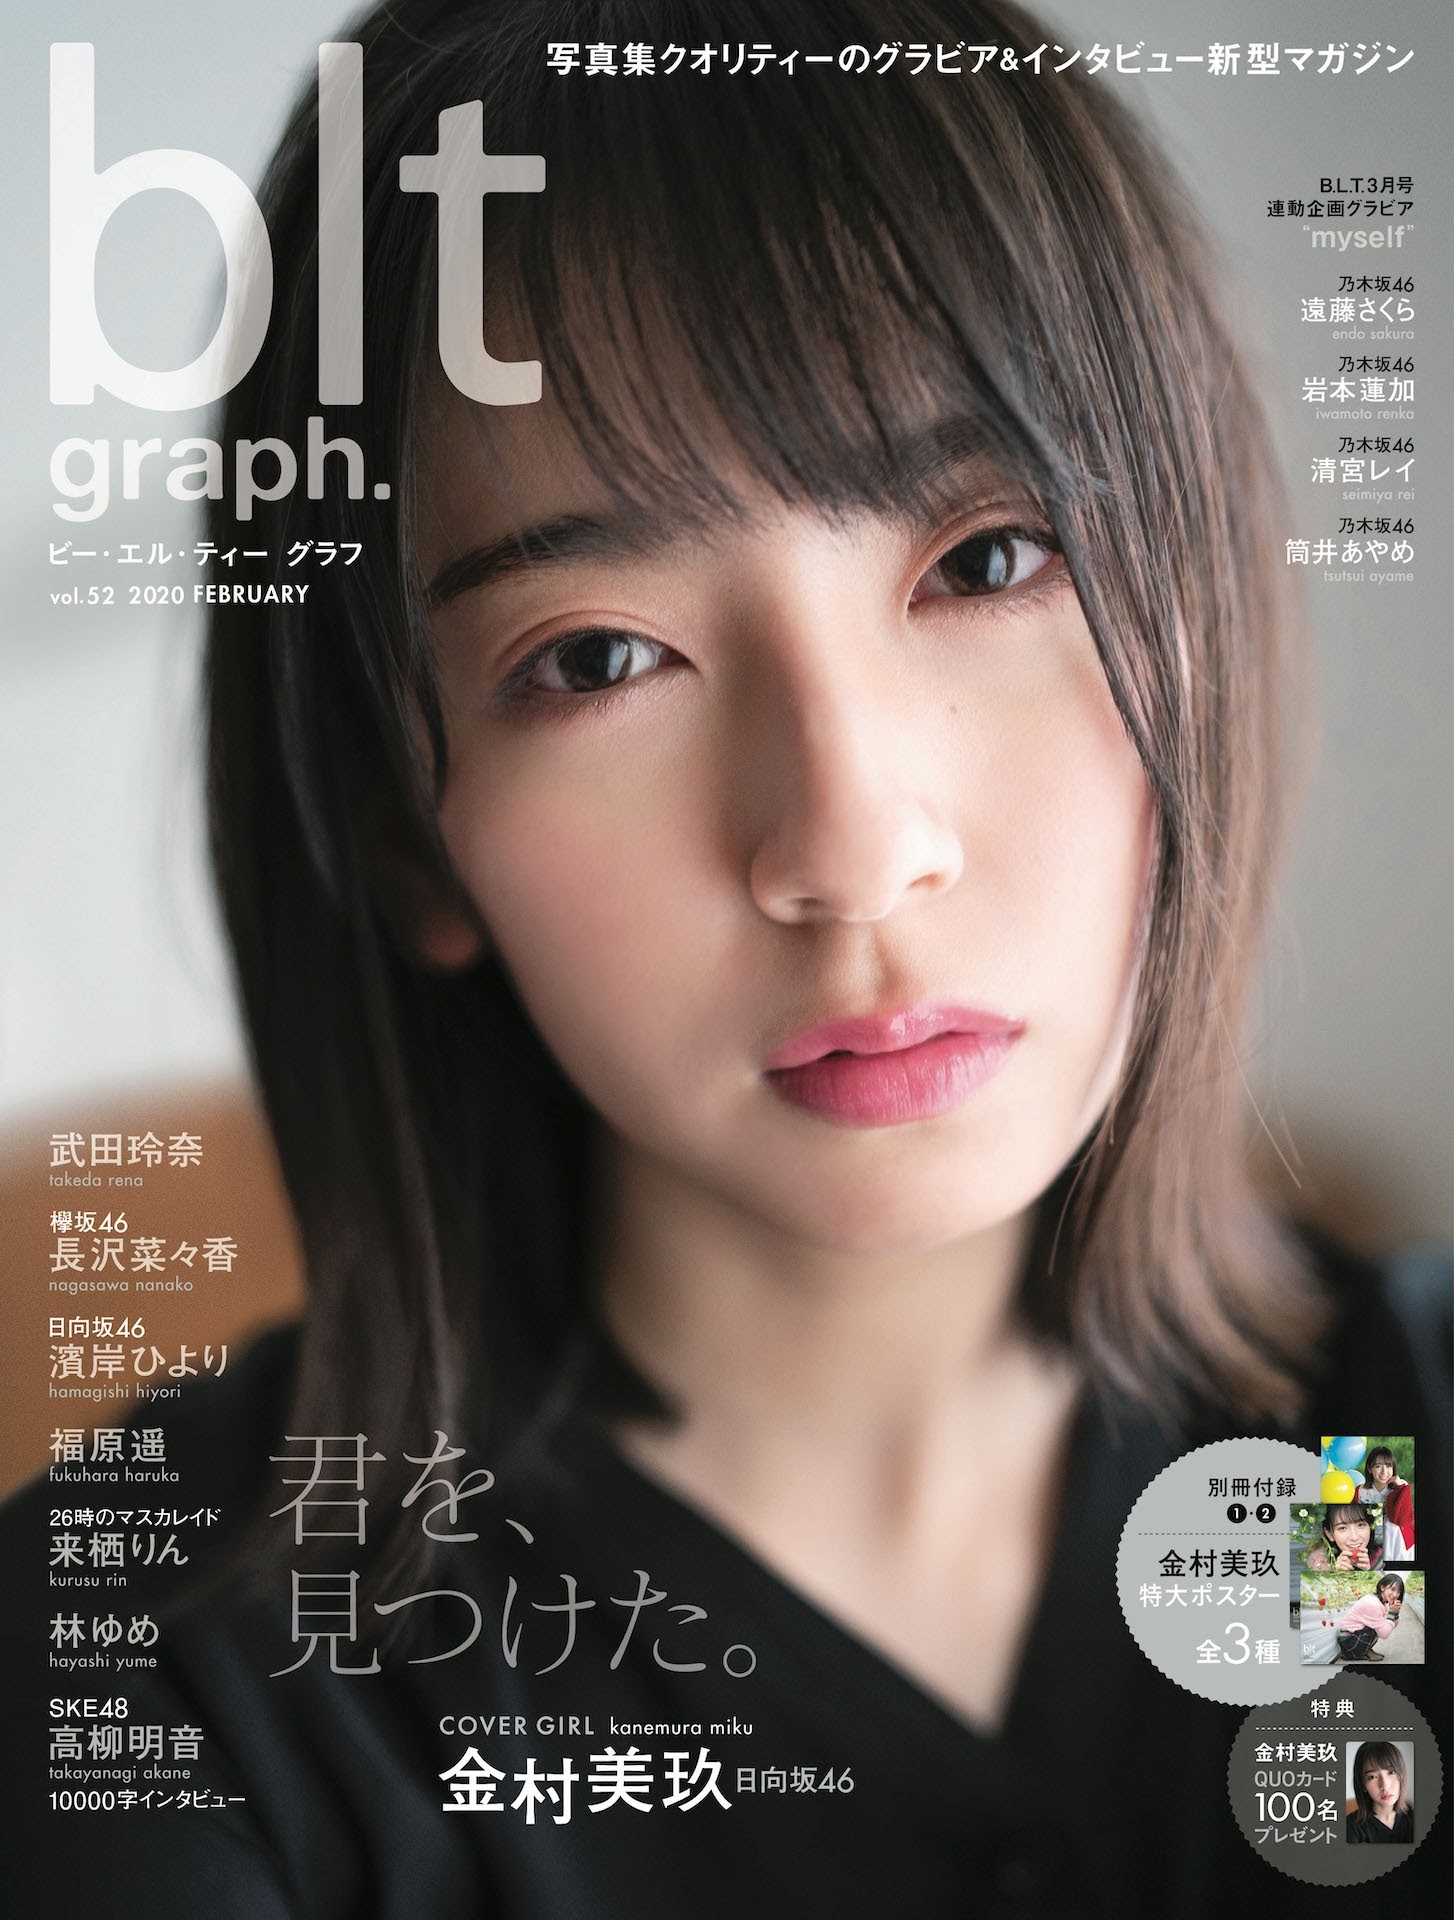 blt graph. Vol.52 Feb 2020 Hinatazaka46 Kanemura Miku's First Independent Cover